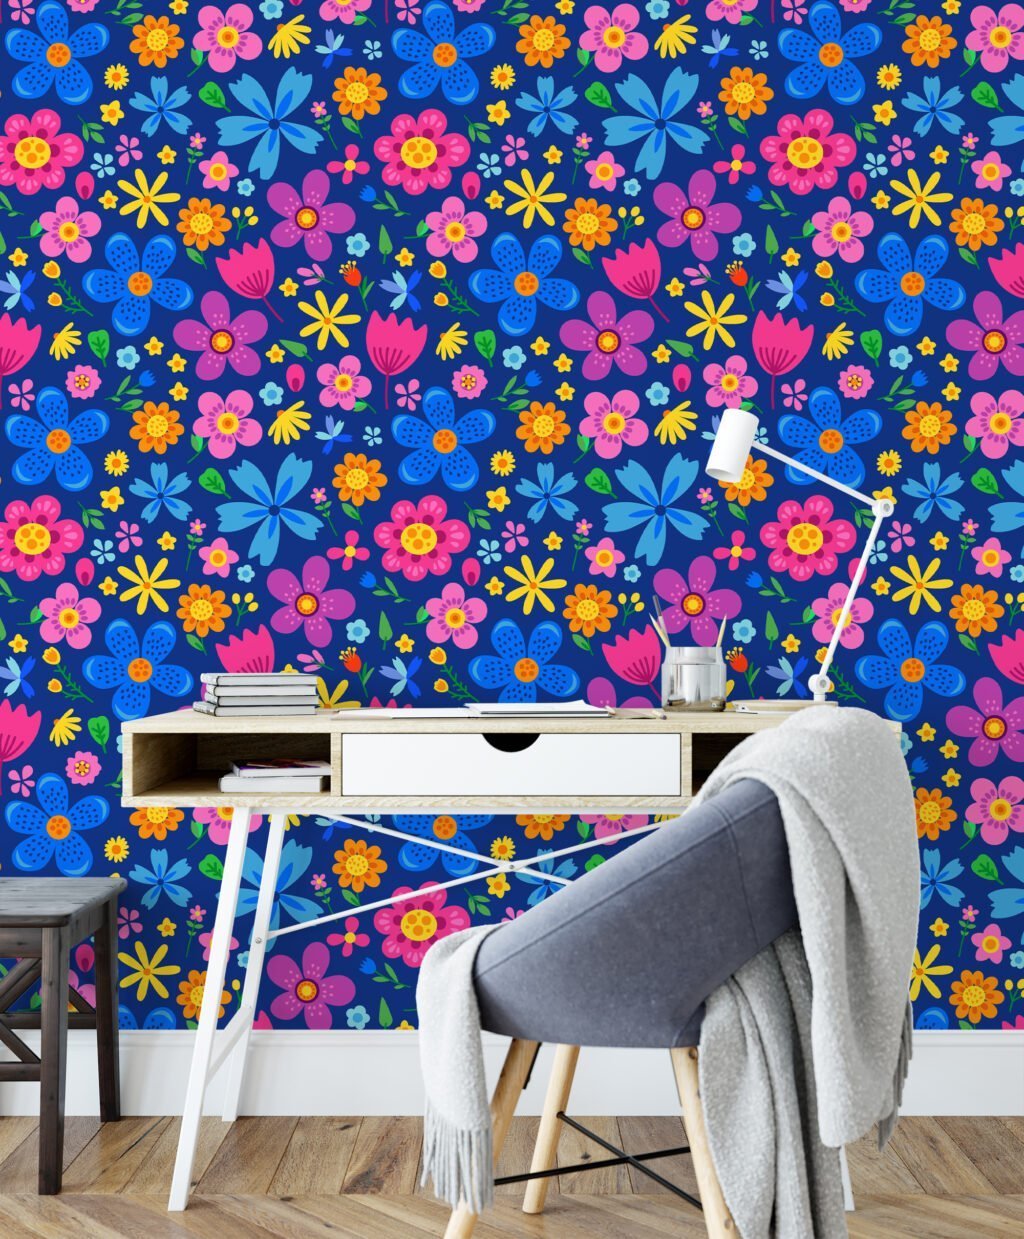 Bright Colored Folk Art Flower Illustration Wallpaper, Joyful Meadow Floral Peel & Stick Wall Mural